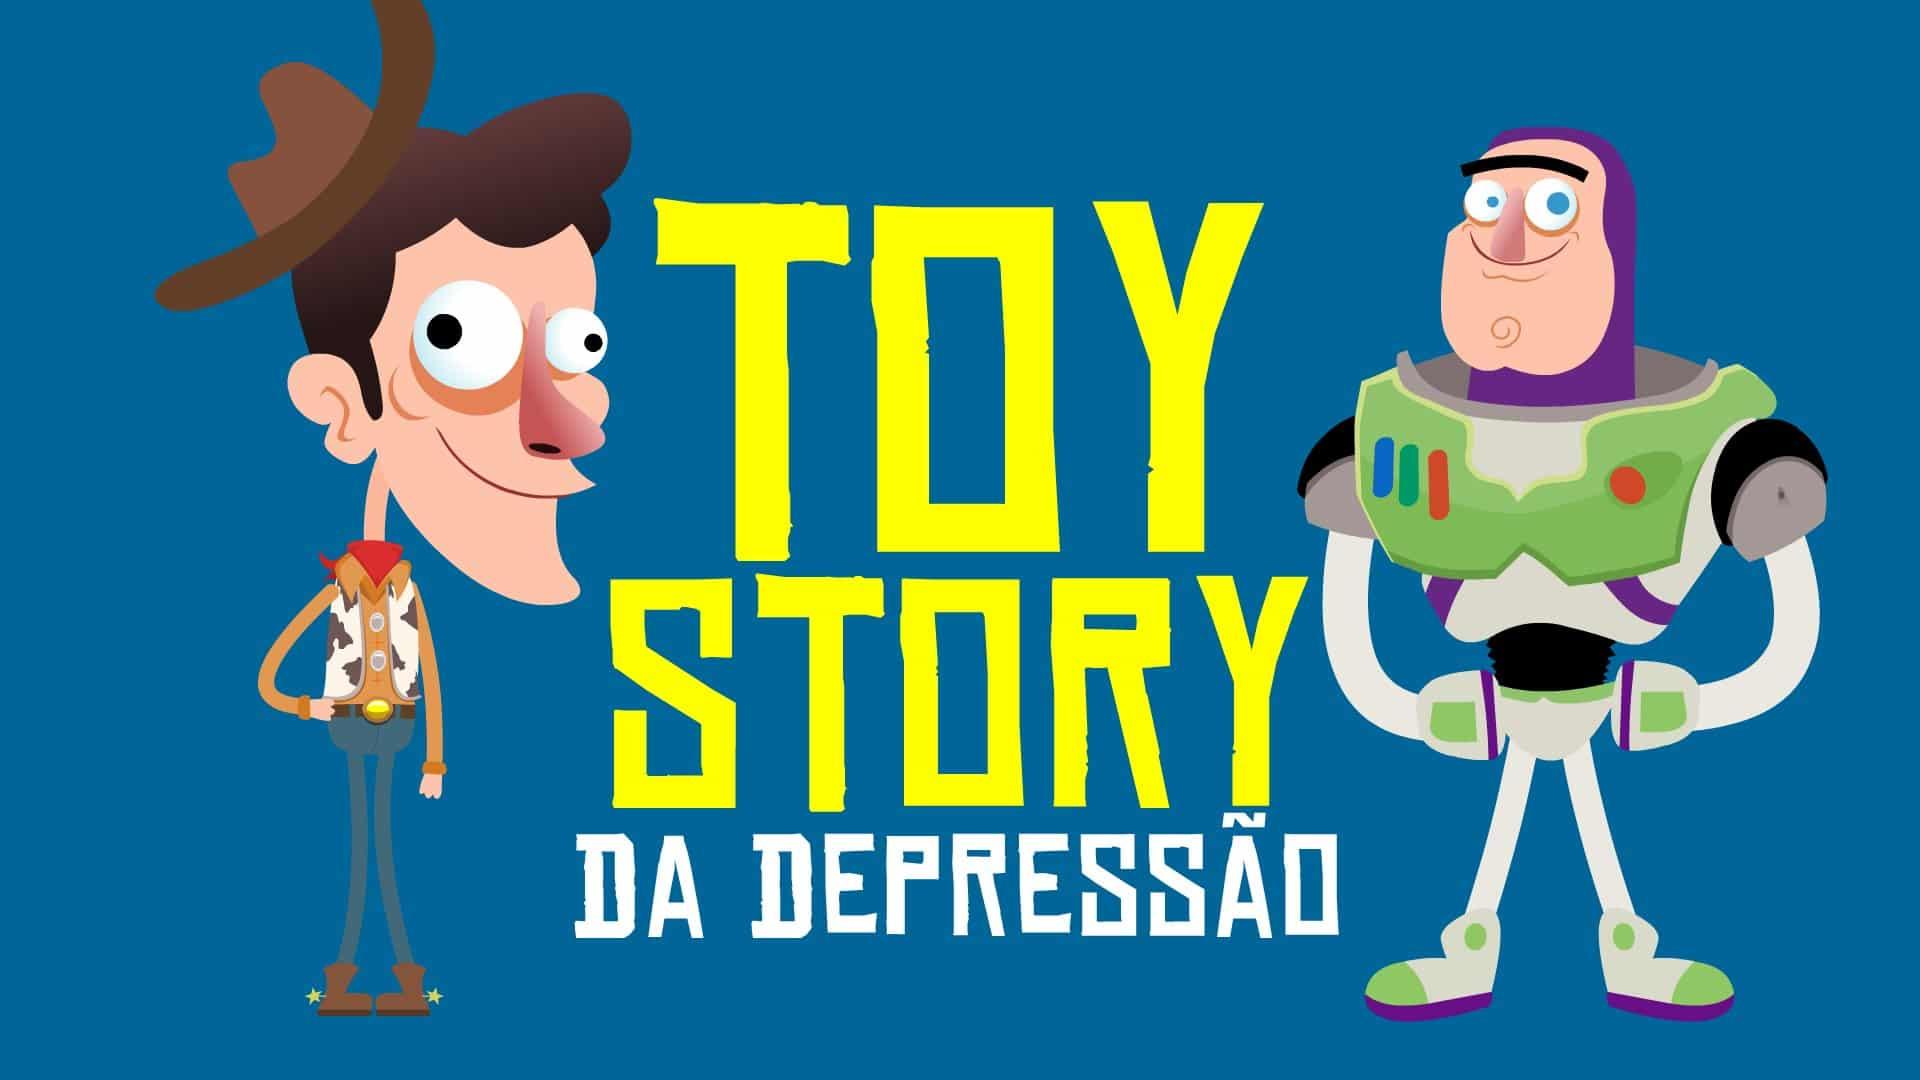 toy story da depressao